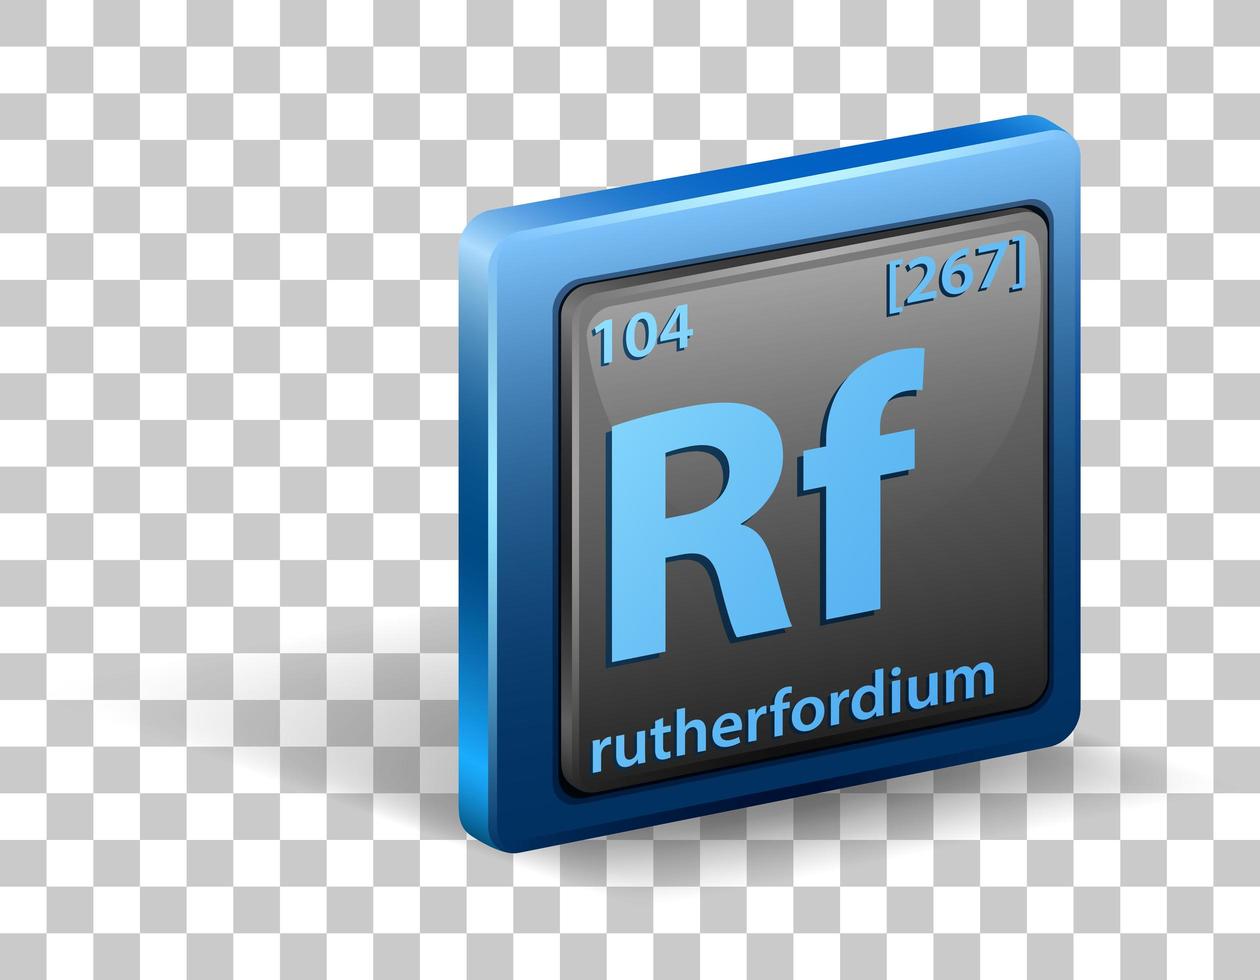 rutherfordium scheikundig element. chemisch symbool met atoomnummer en atoommassa. vector